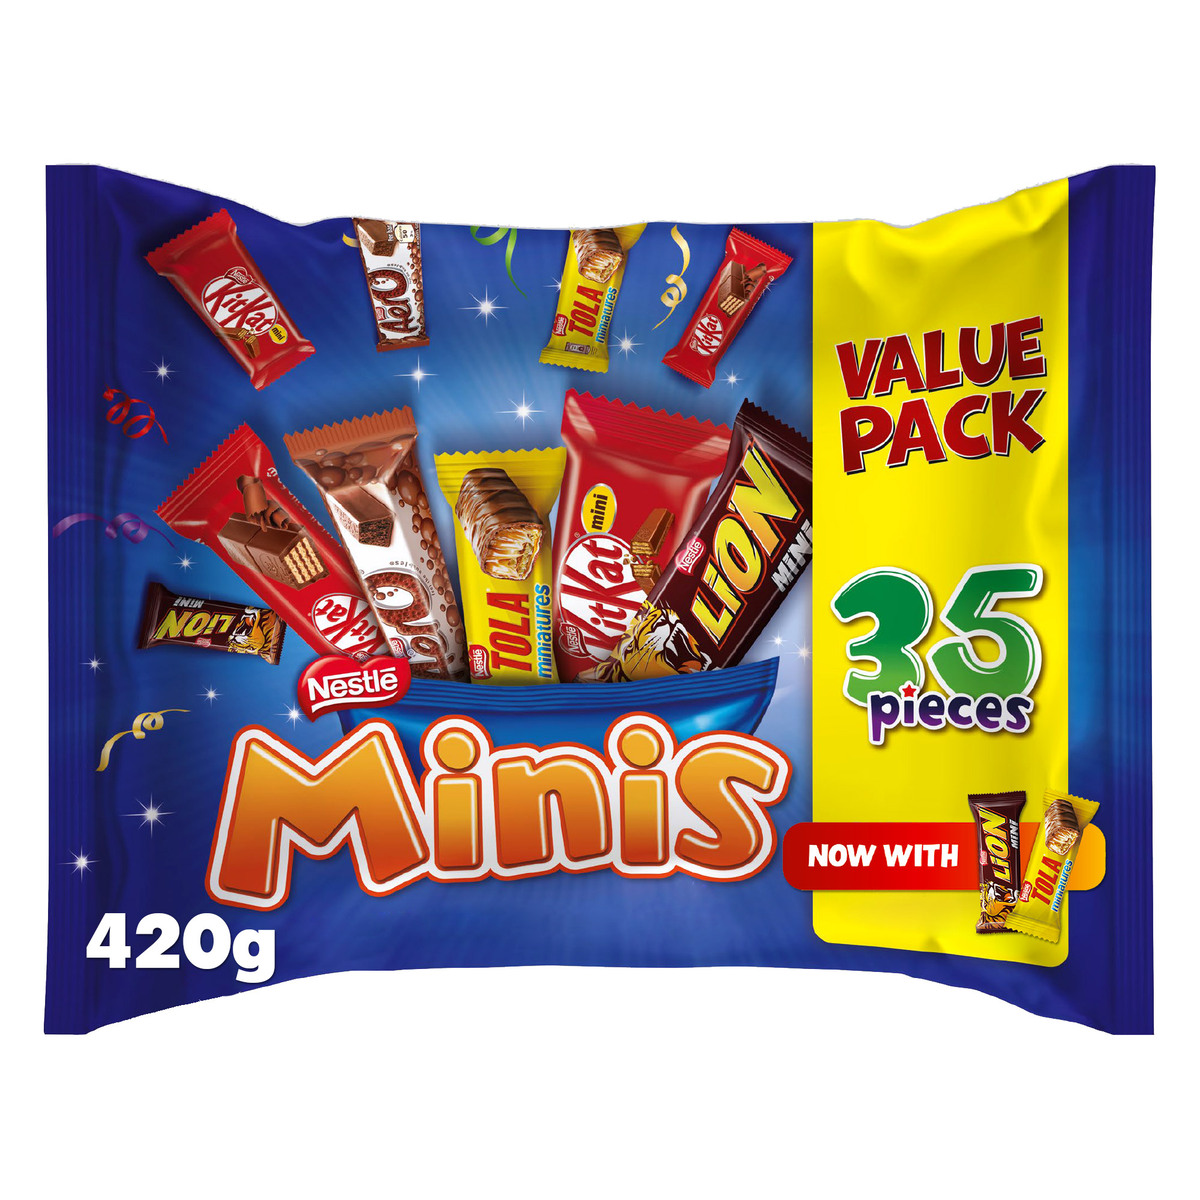 Nestle Minis Chocolate Value Pack 35 pcs 420 g